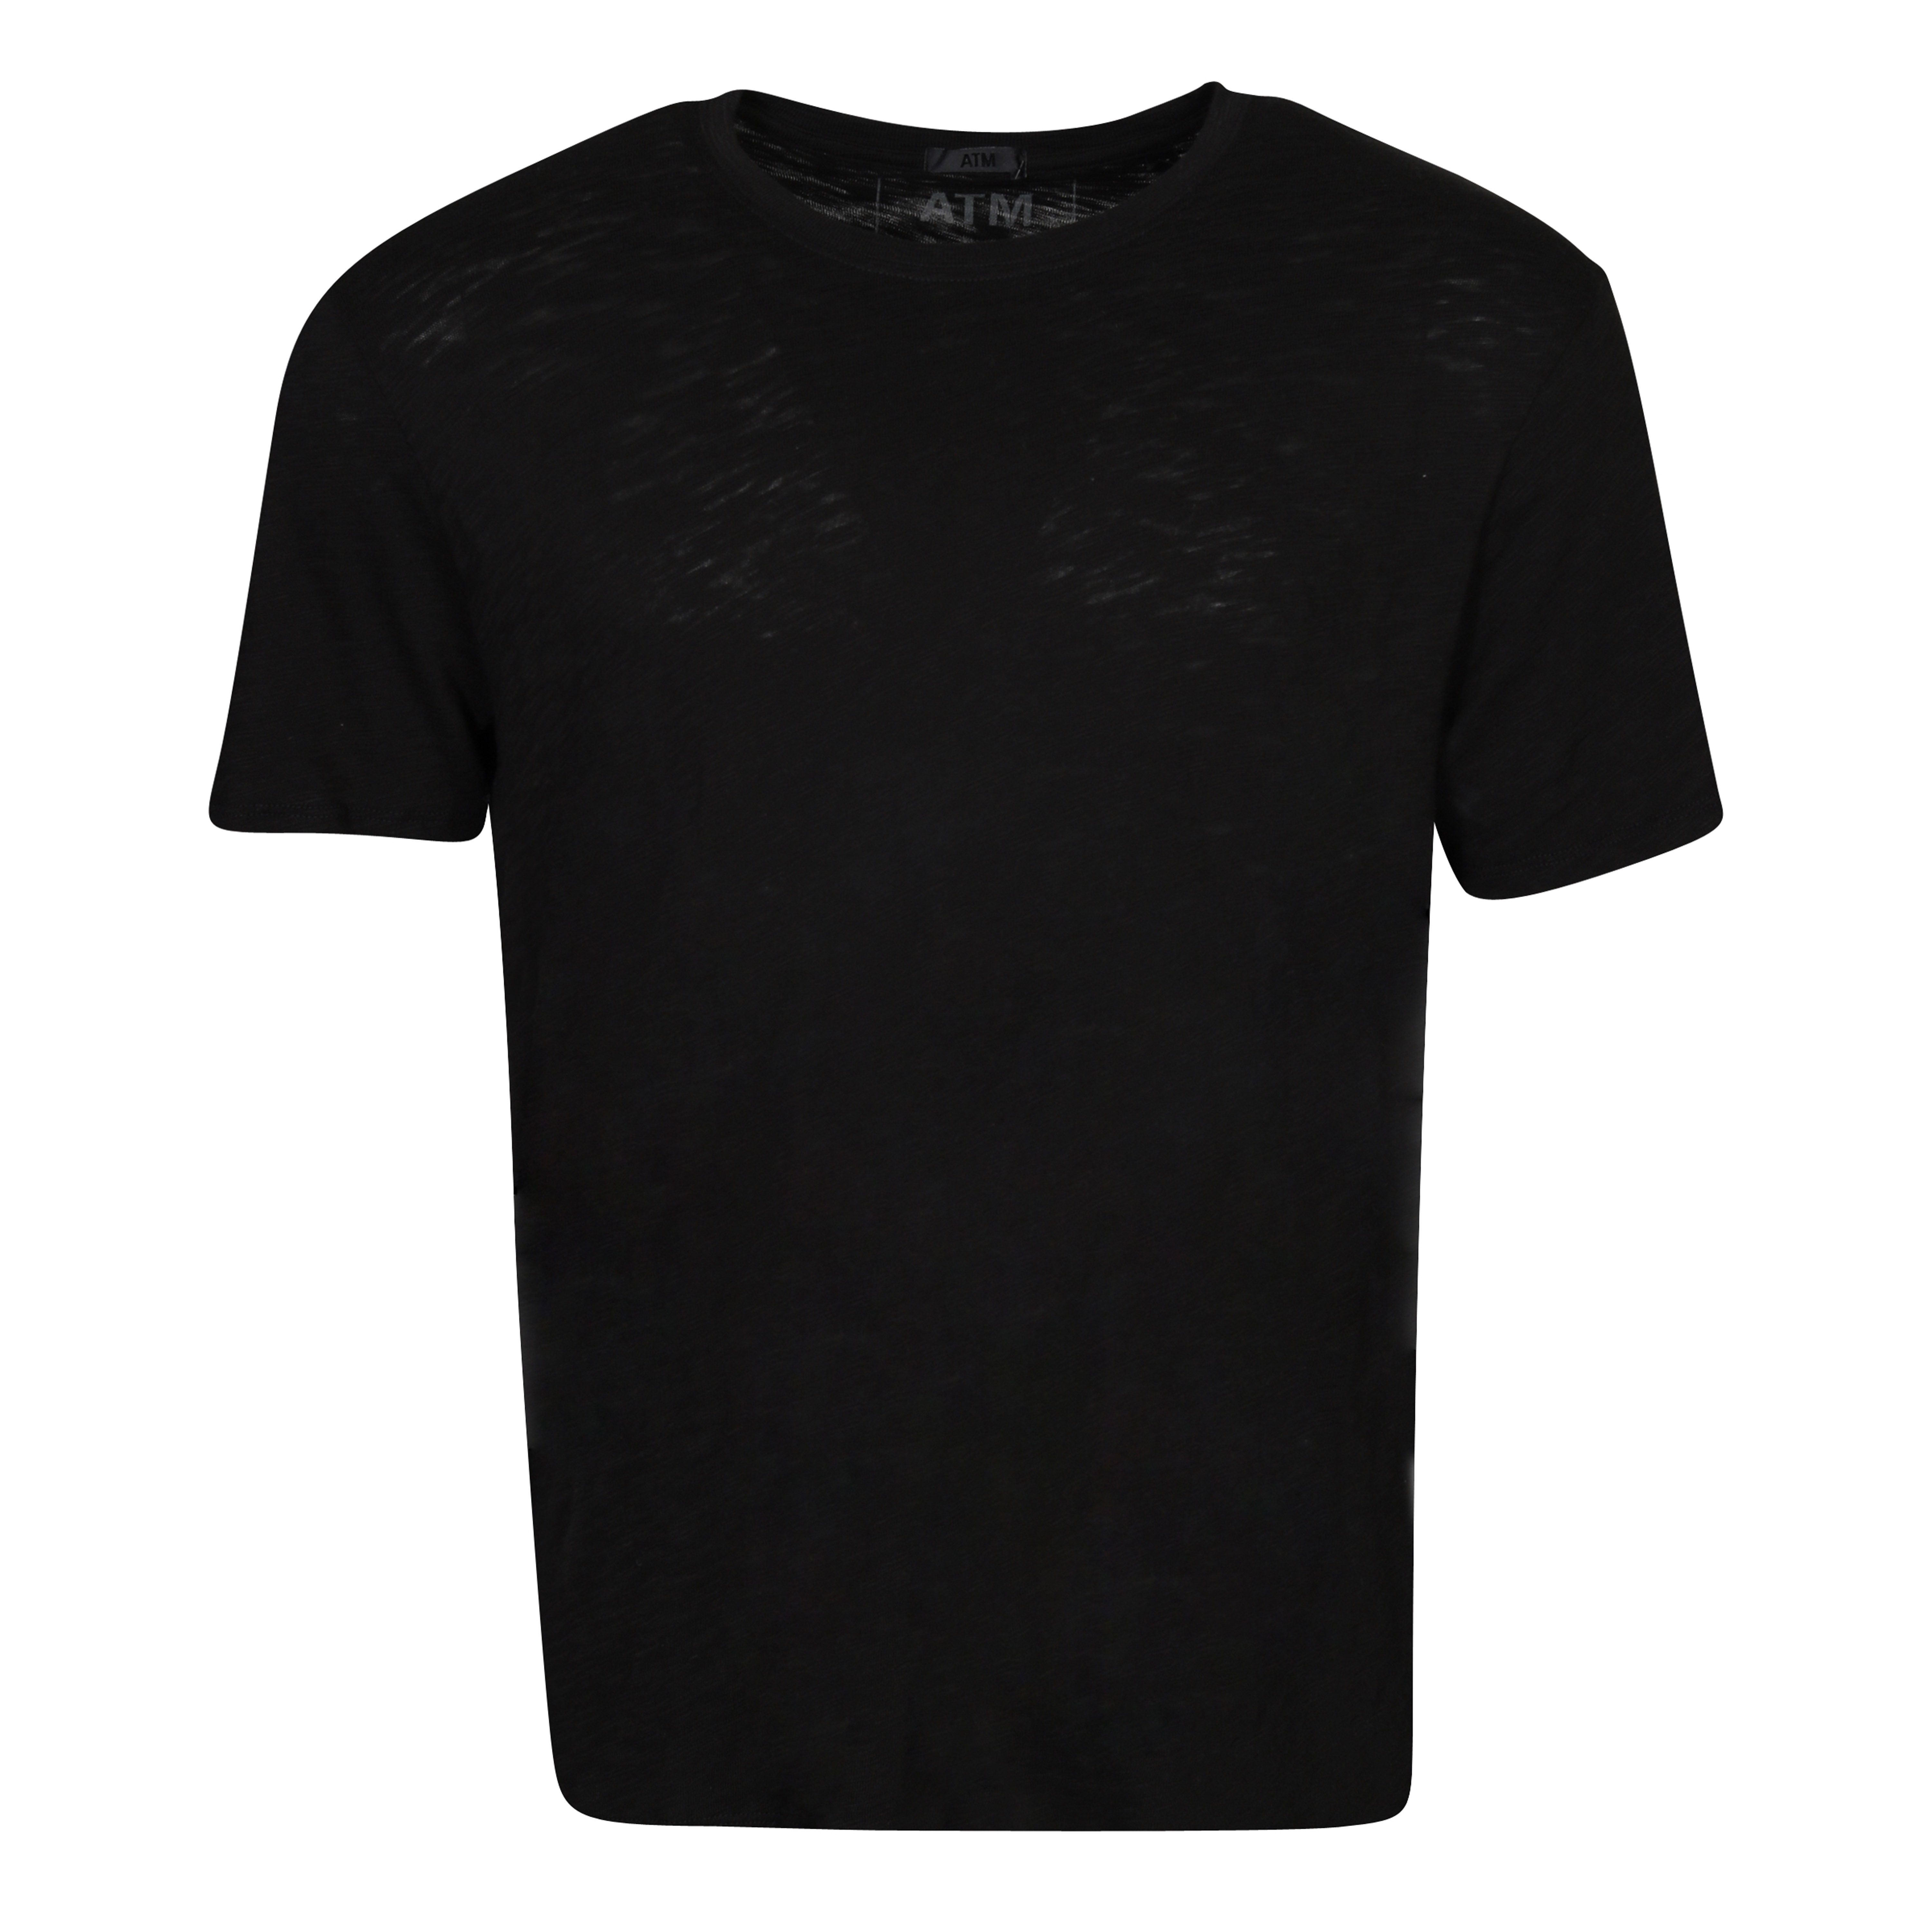 ATM Slub Jersey T-Shirt in Black 2XL